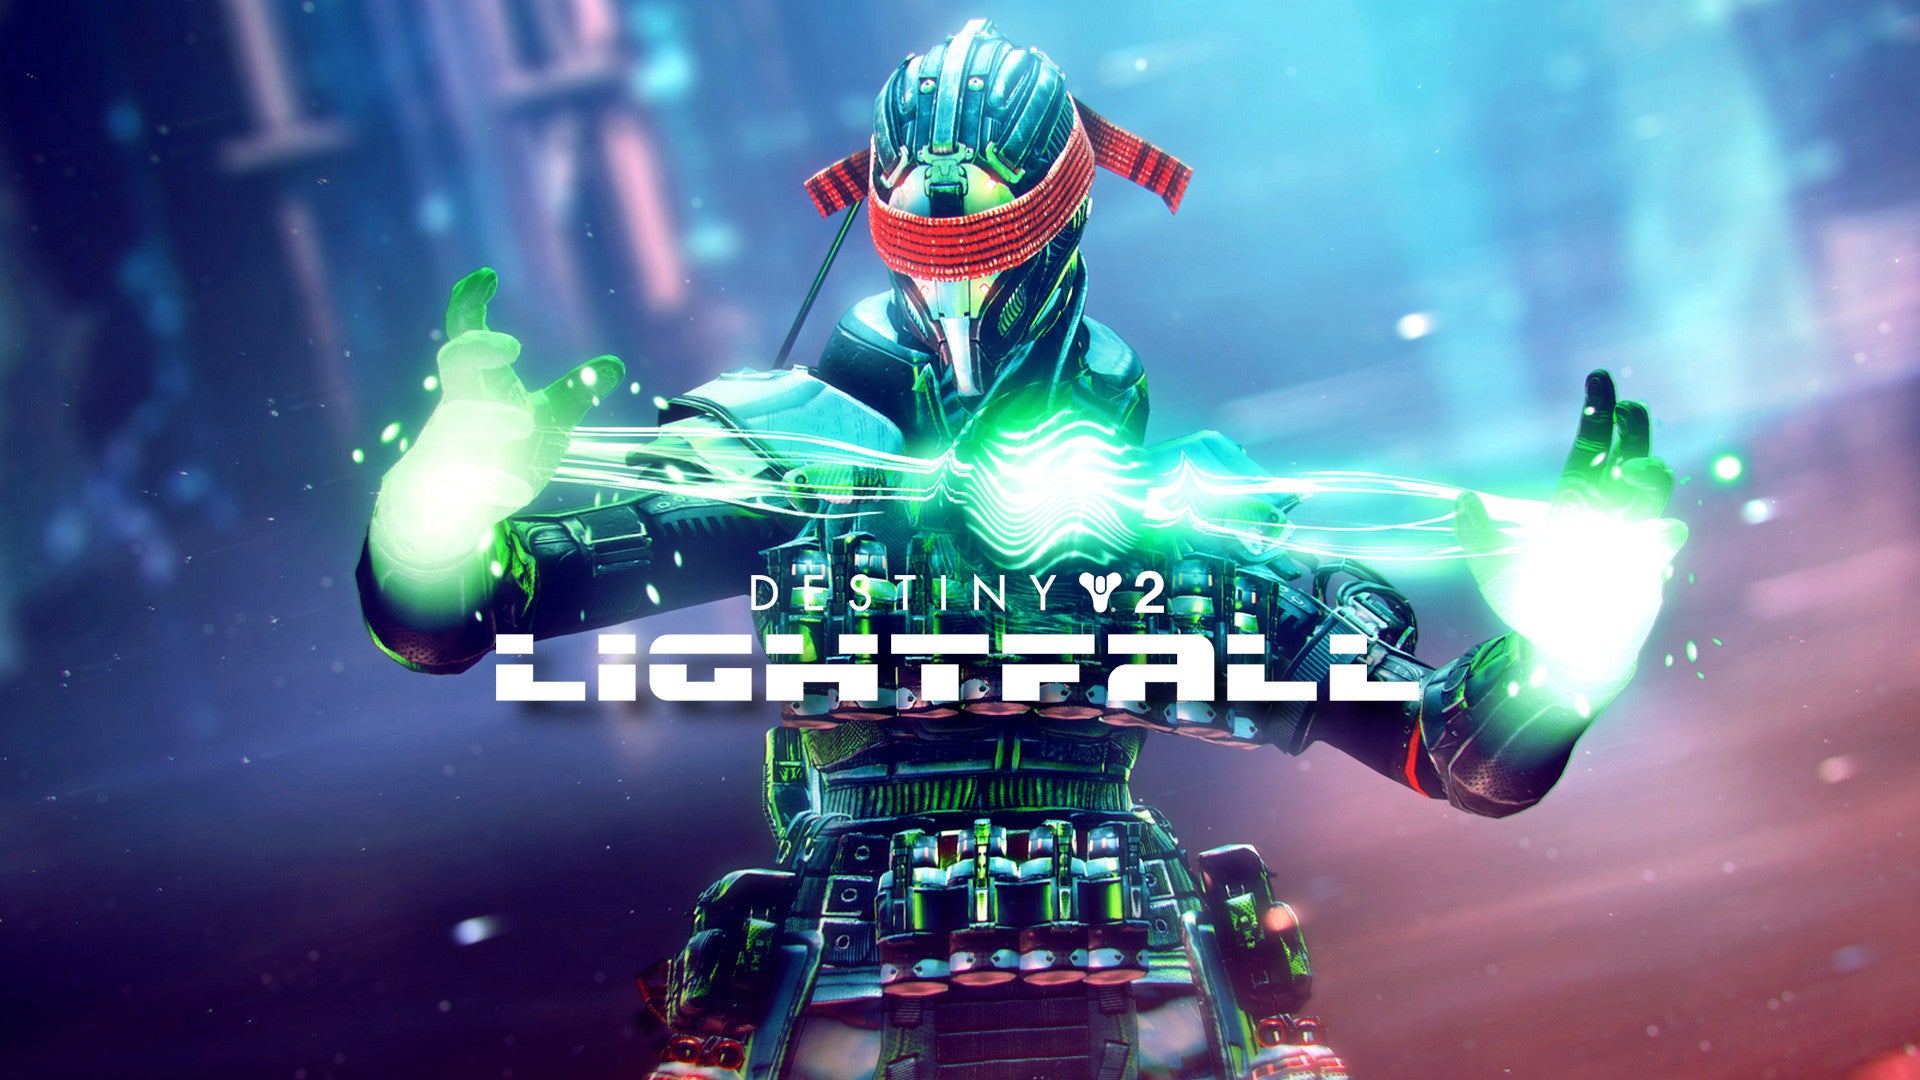 Destiny 2 Lightfall Angek ndigt Erste Details Zur Neuen Erweiterung 